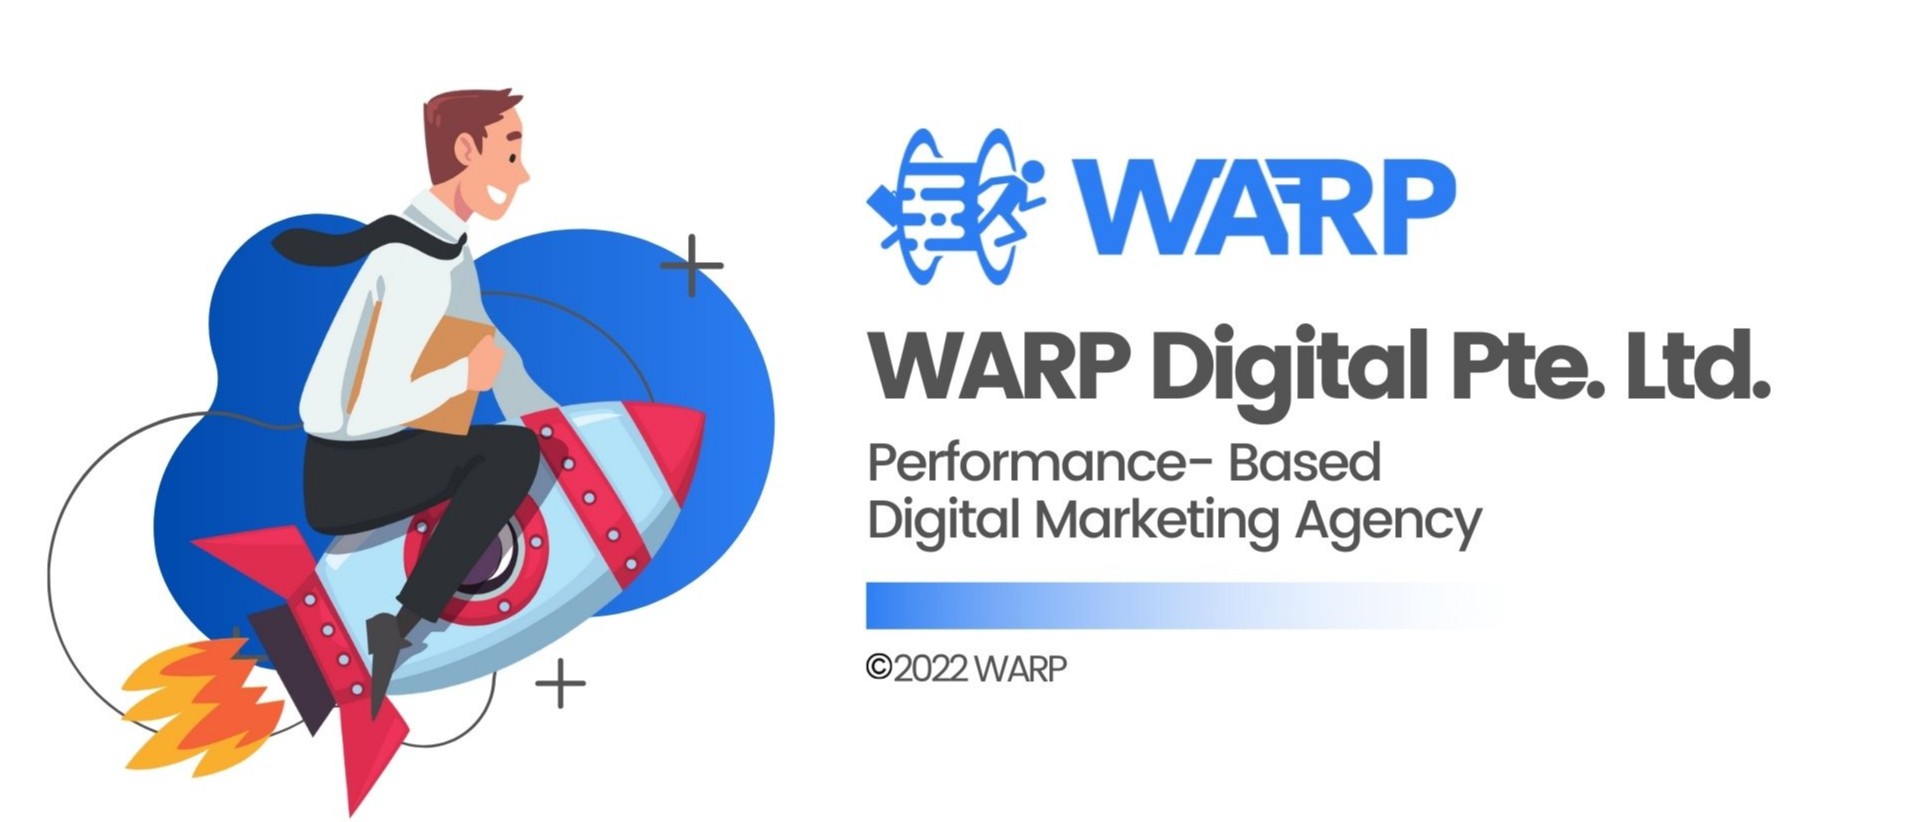 Warp Digital